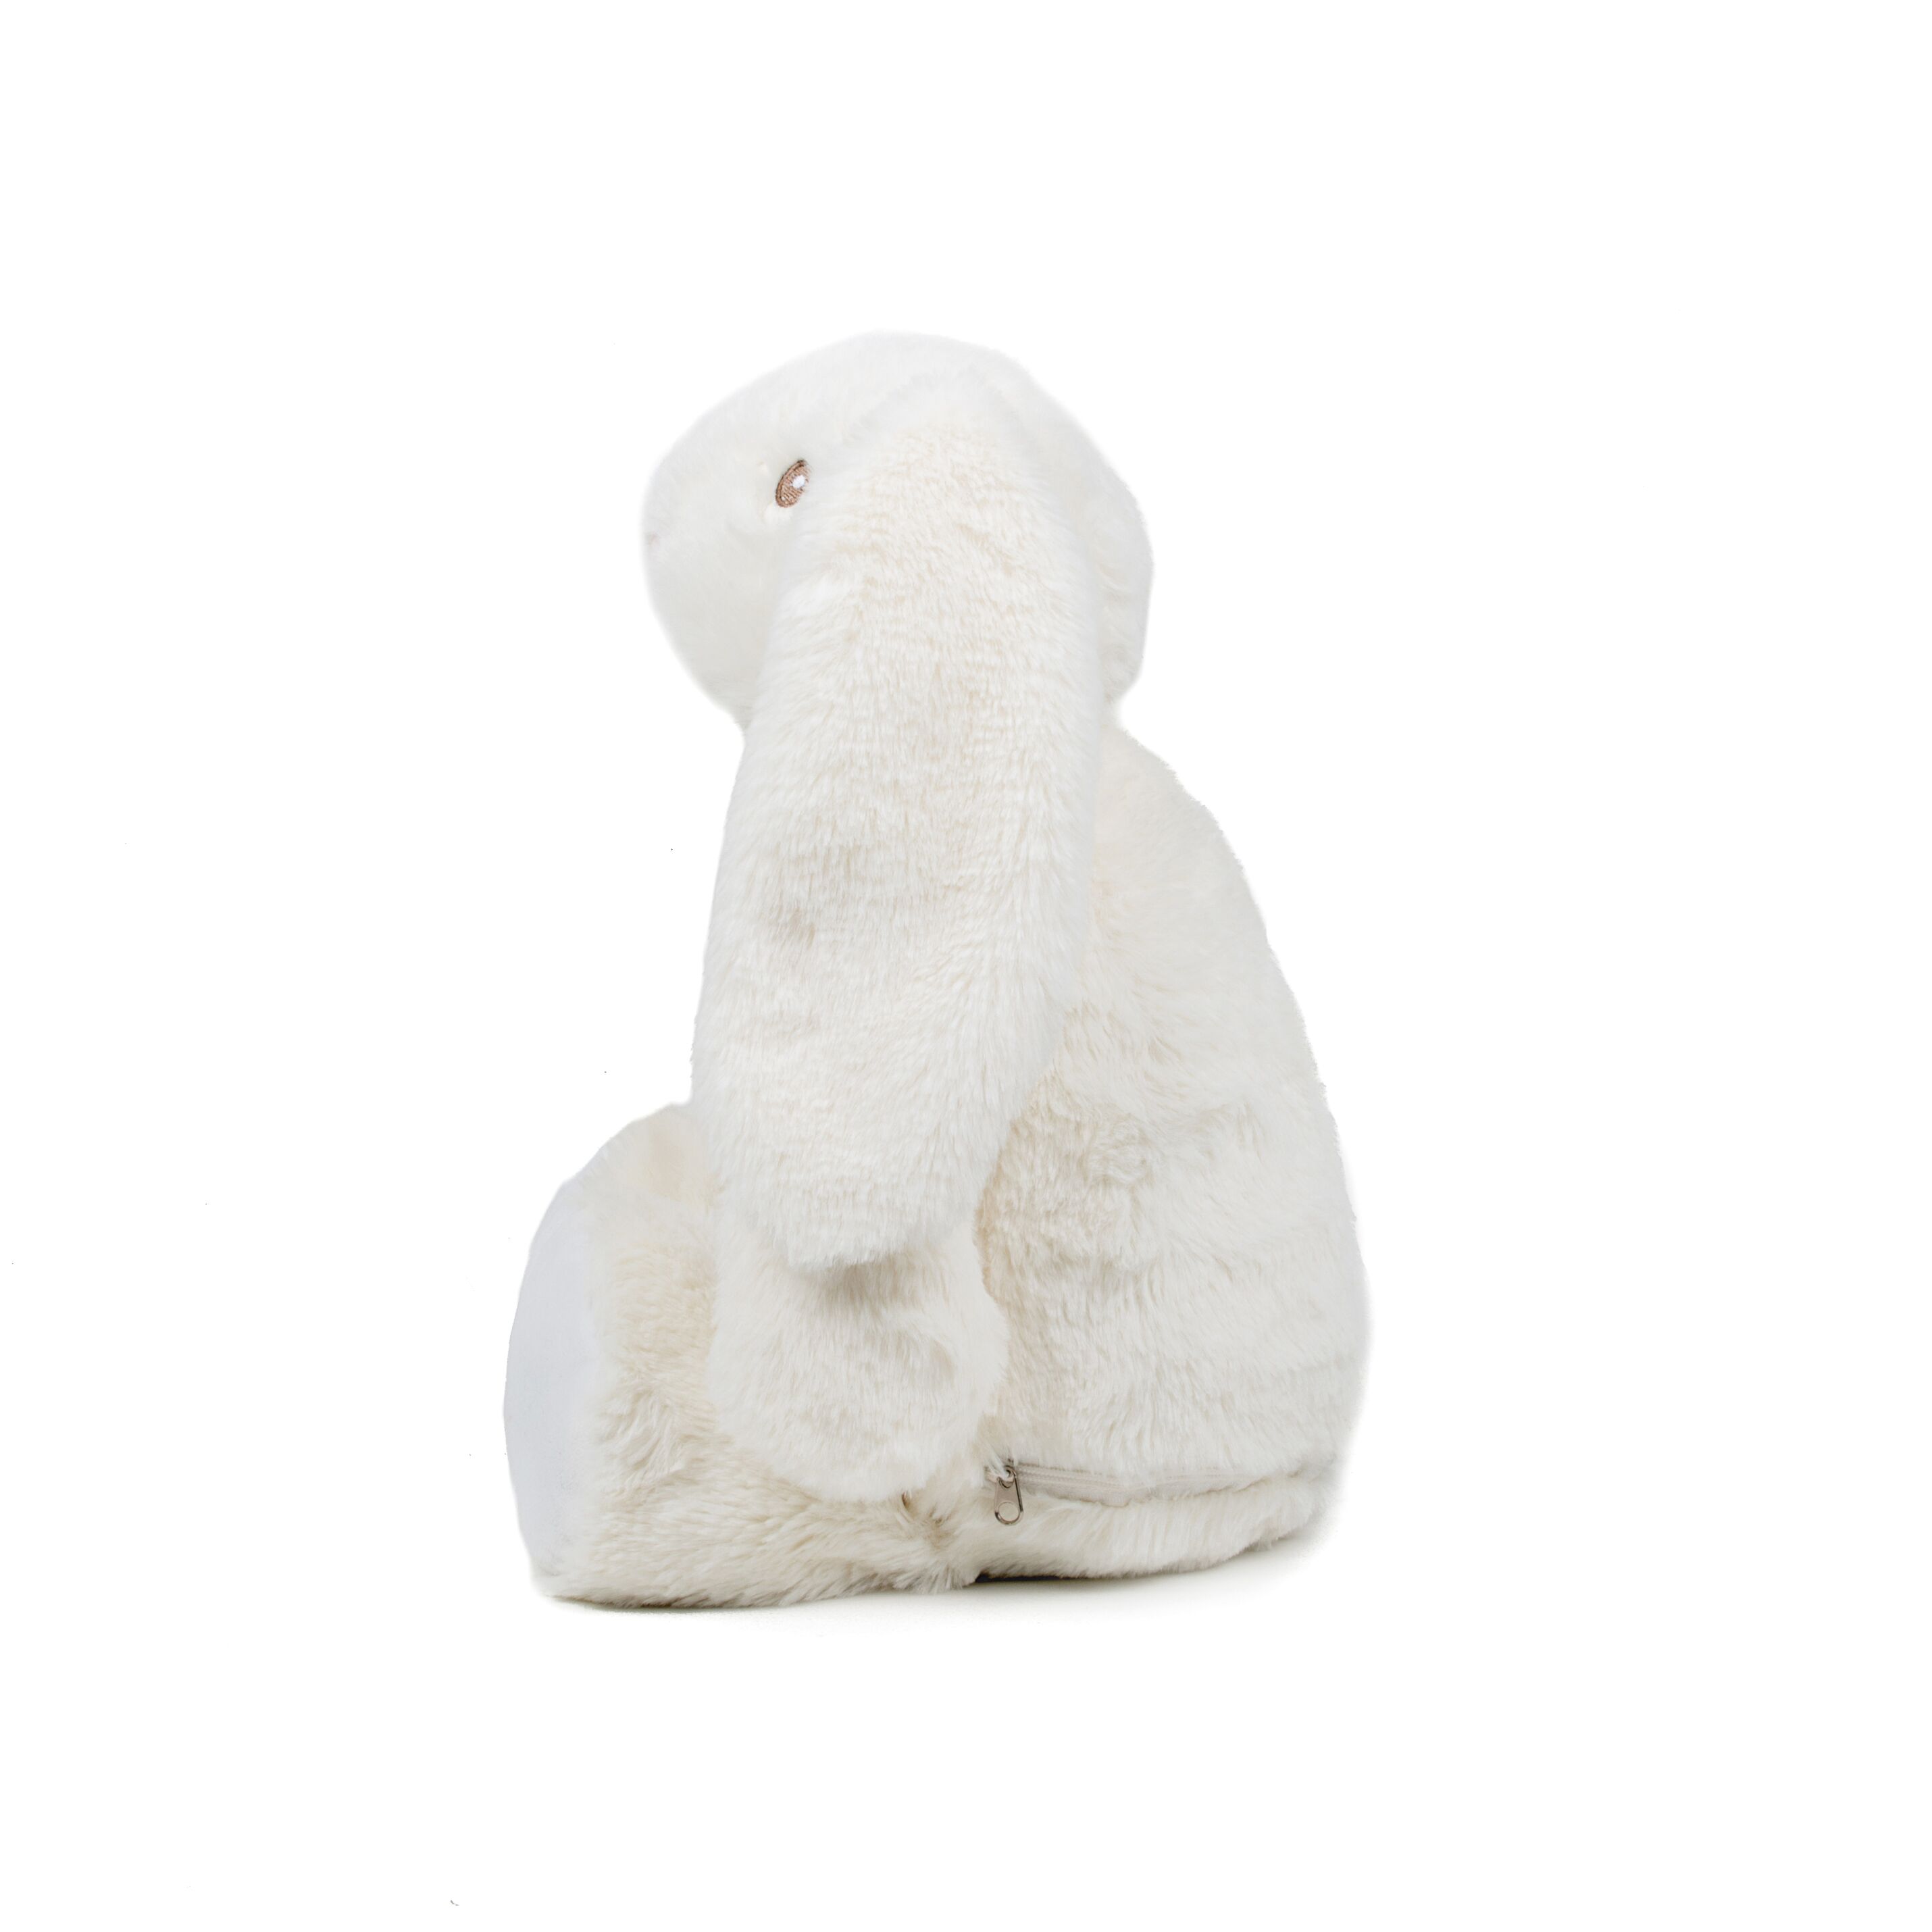 Personalised Plush Bunny